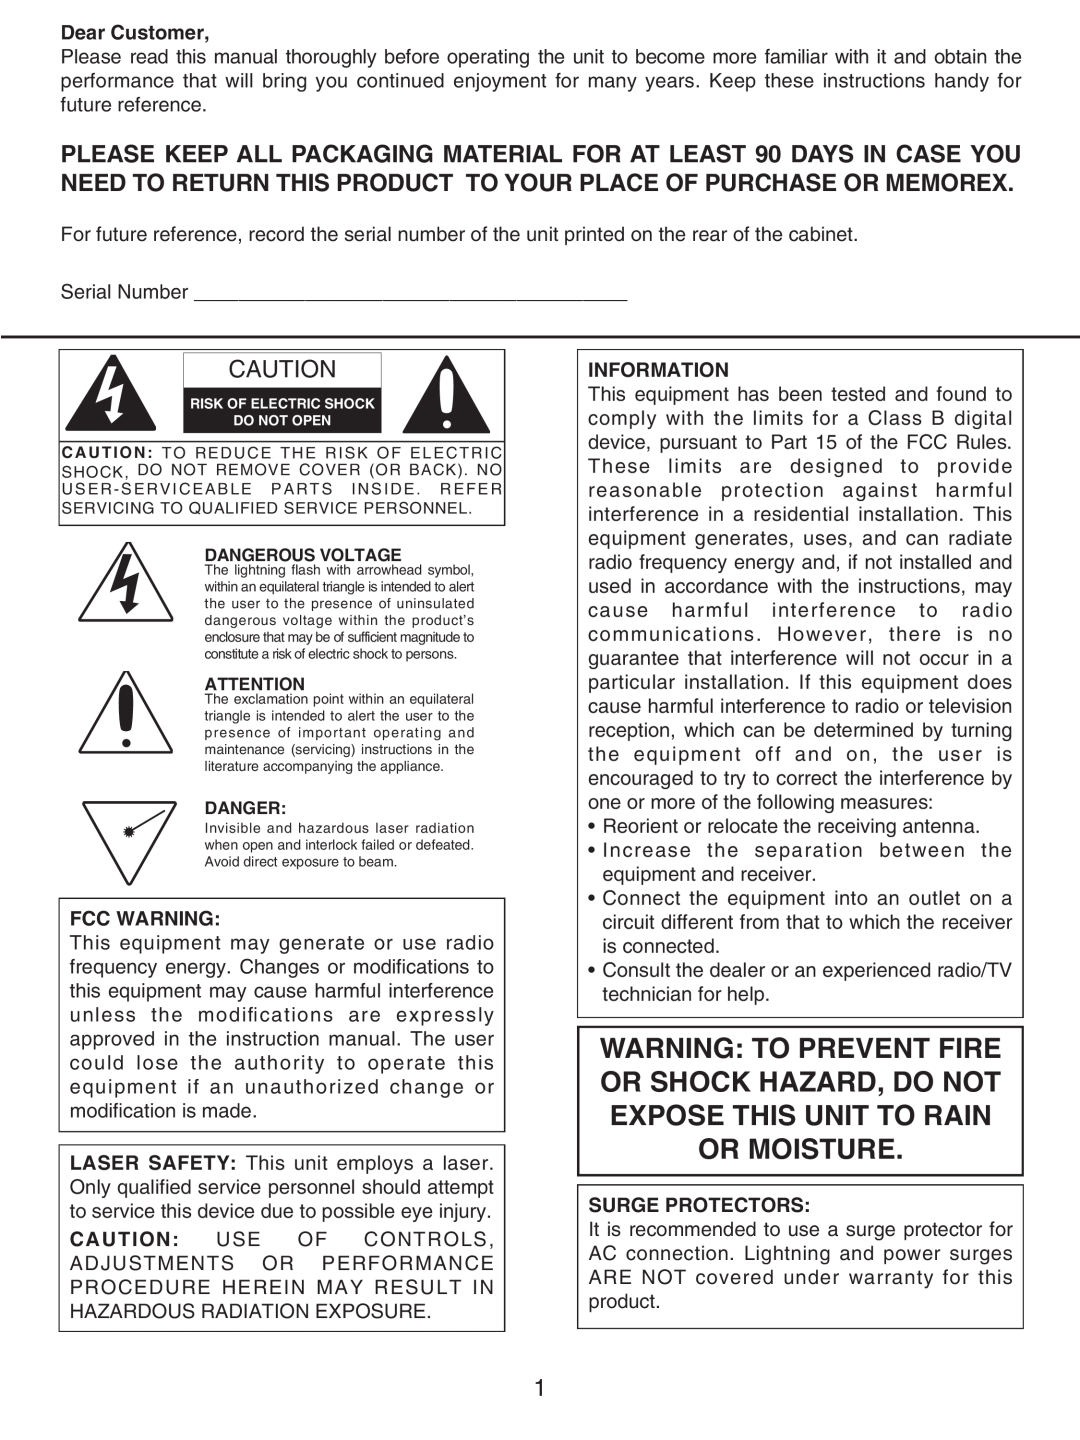 Memorex MX7300 manual Fcc Warning, Information, Surge Protectors 